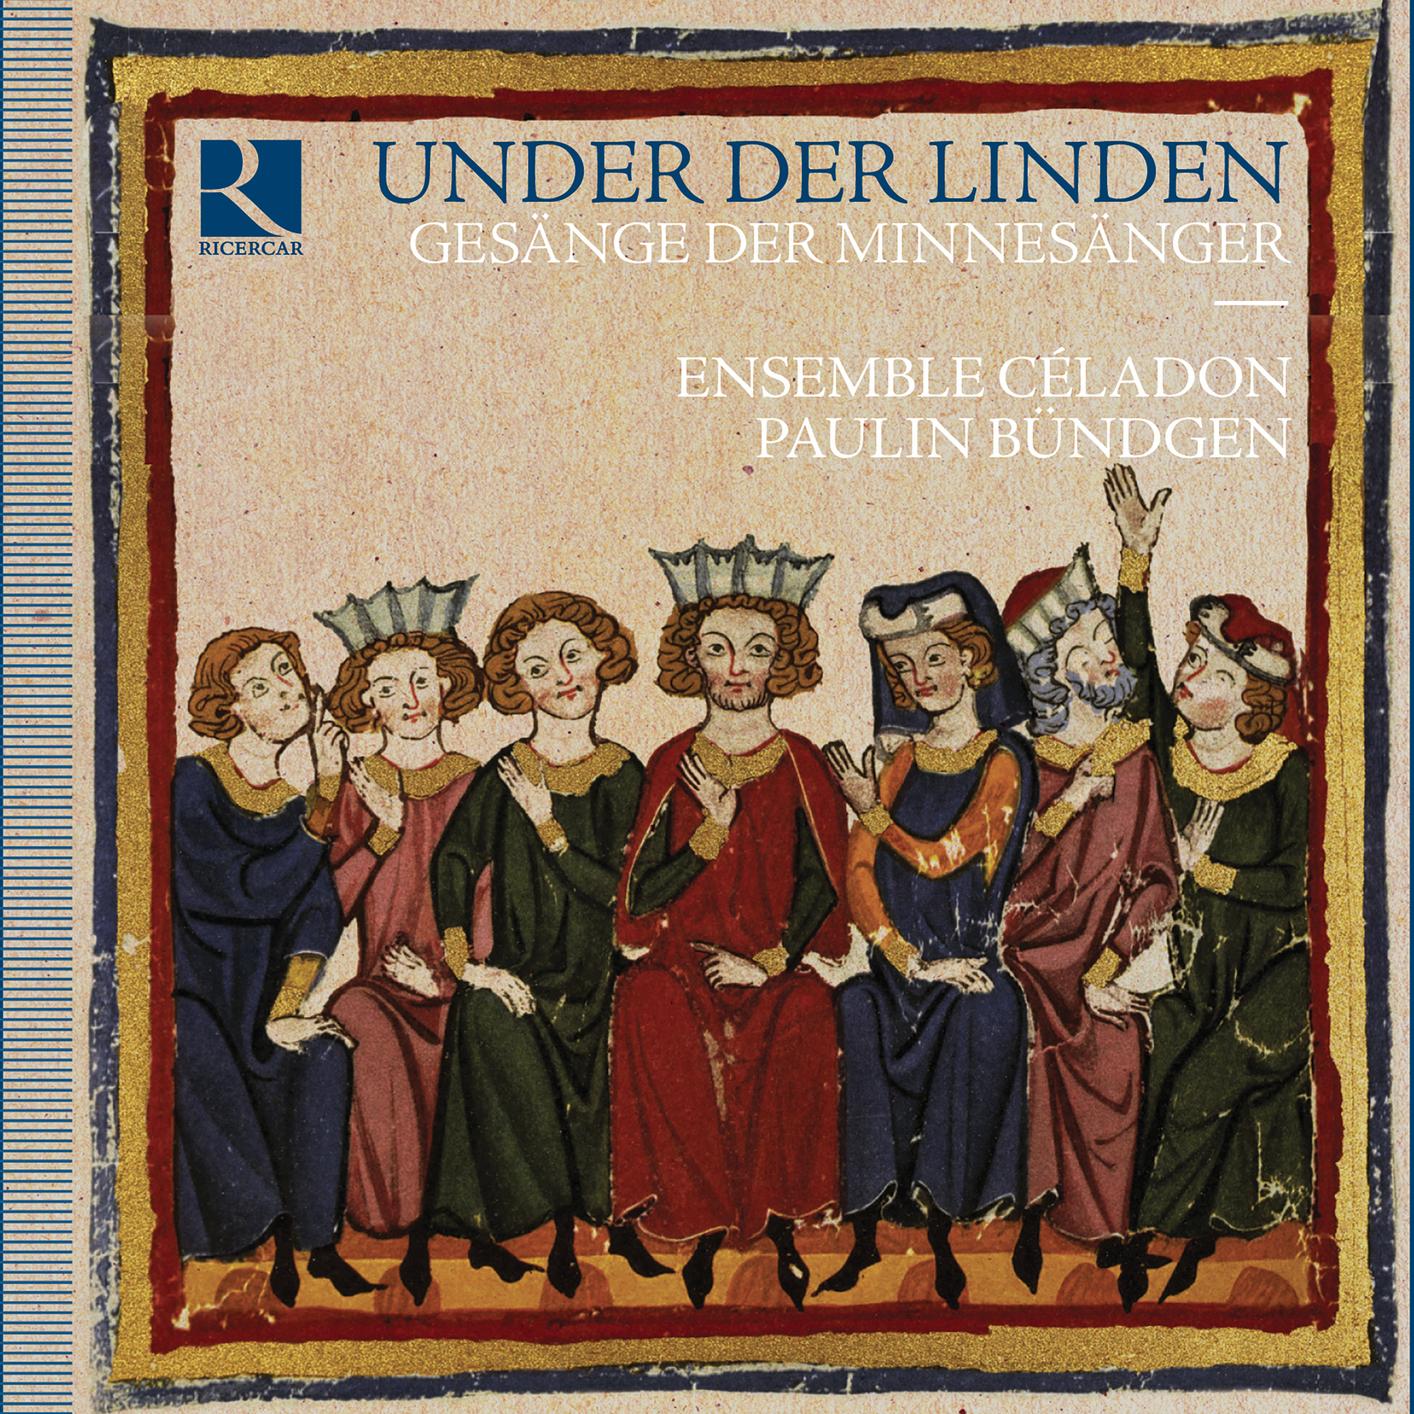 Ens. Celadon - Under der Linden - Songs of the Minnesaenger